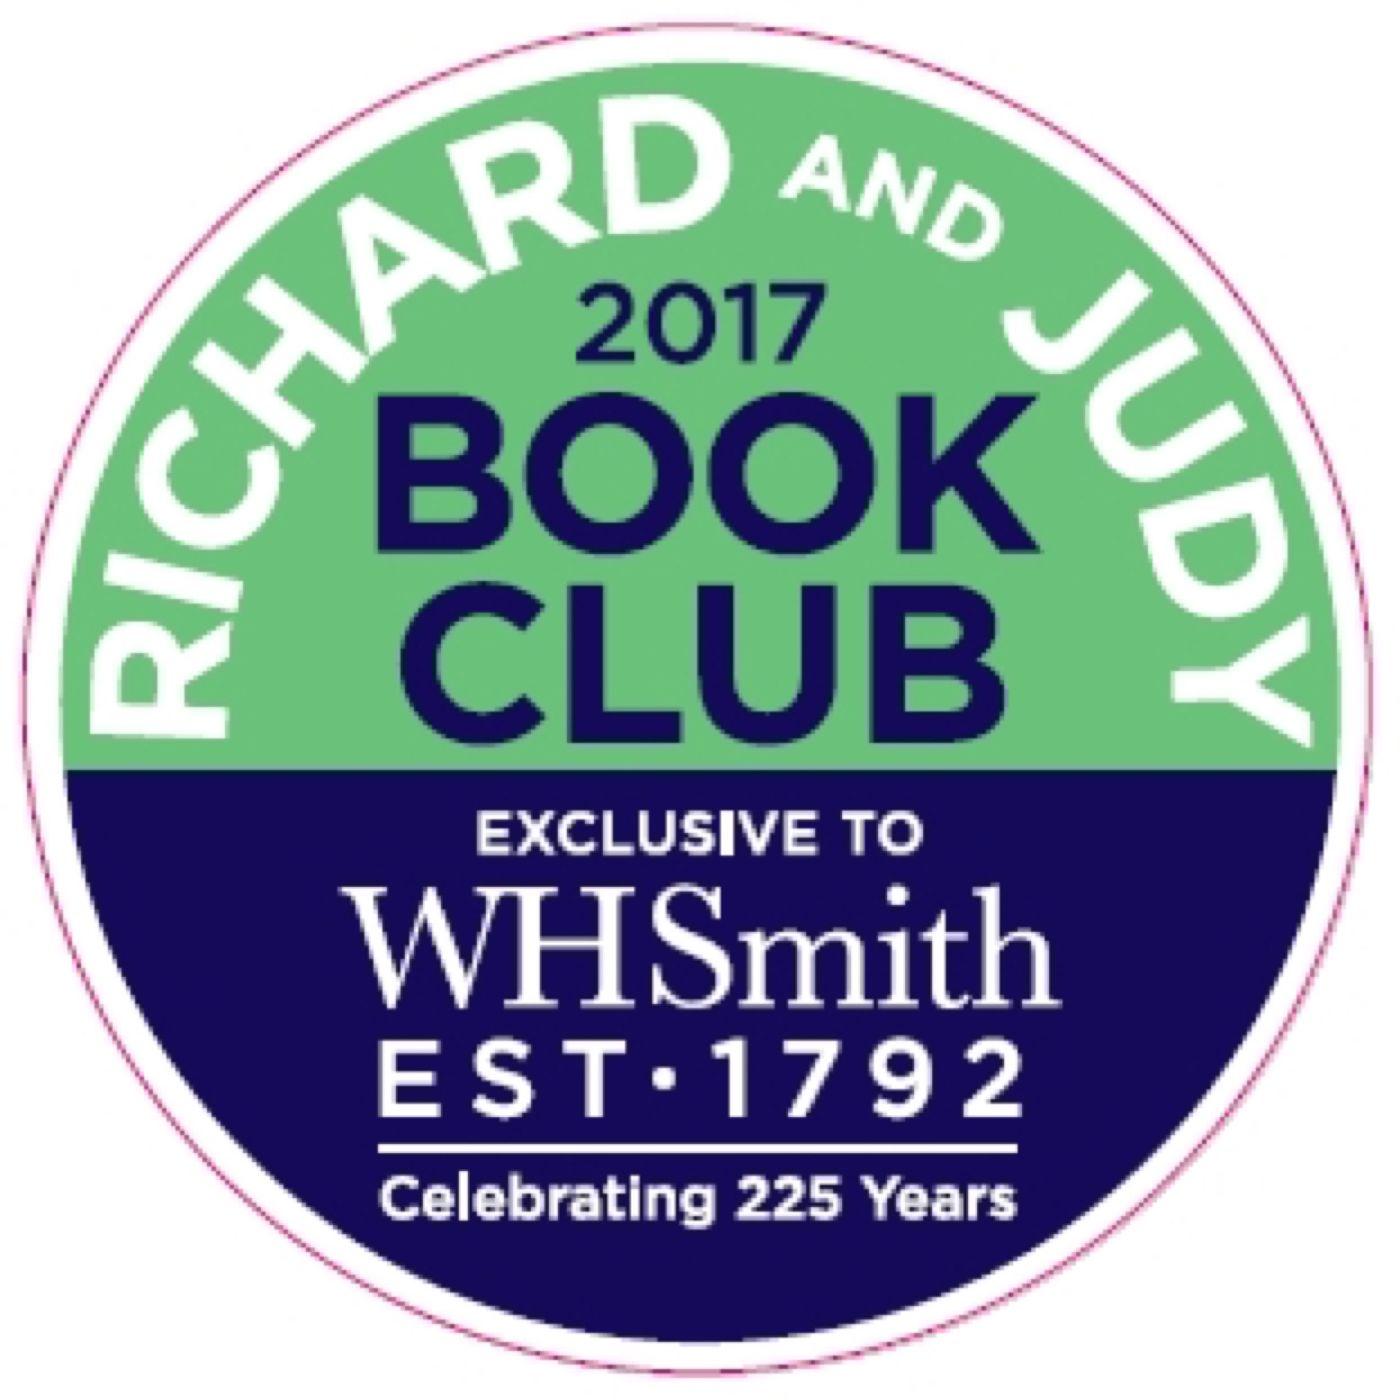 WHSmith Logo - pod|fanatic | Podcast: Richard and Judy Book Club Podcast ...